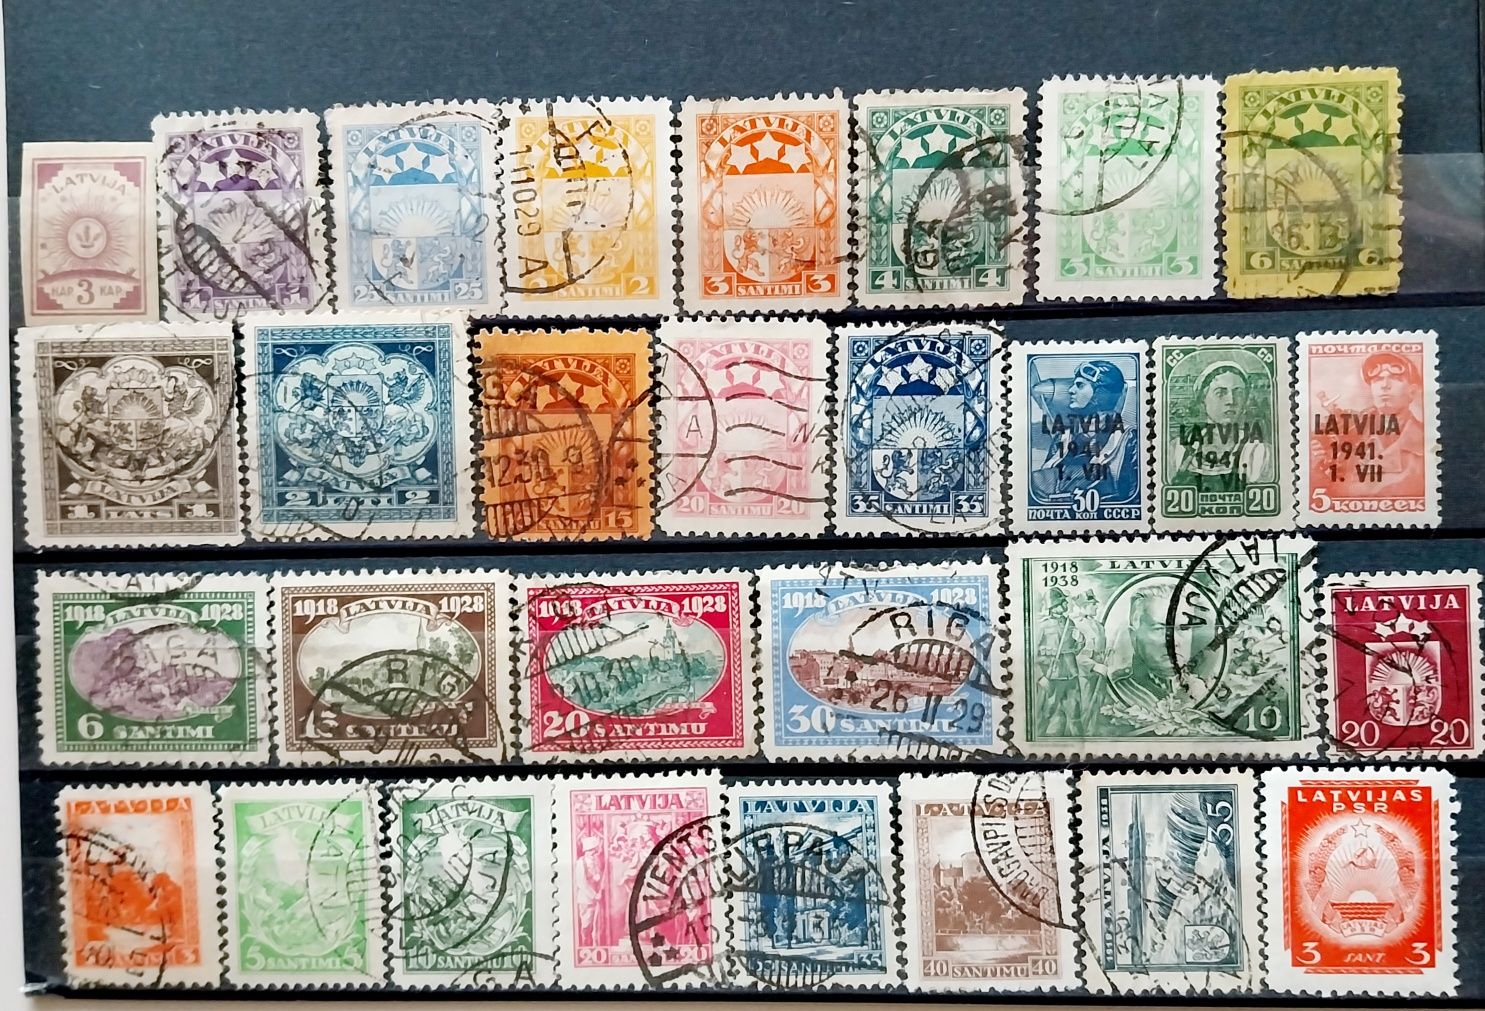 Lot timbre vechi Groenlanda, Lituania, Letonia, Estonia